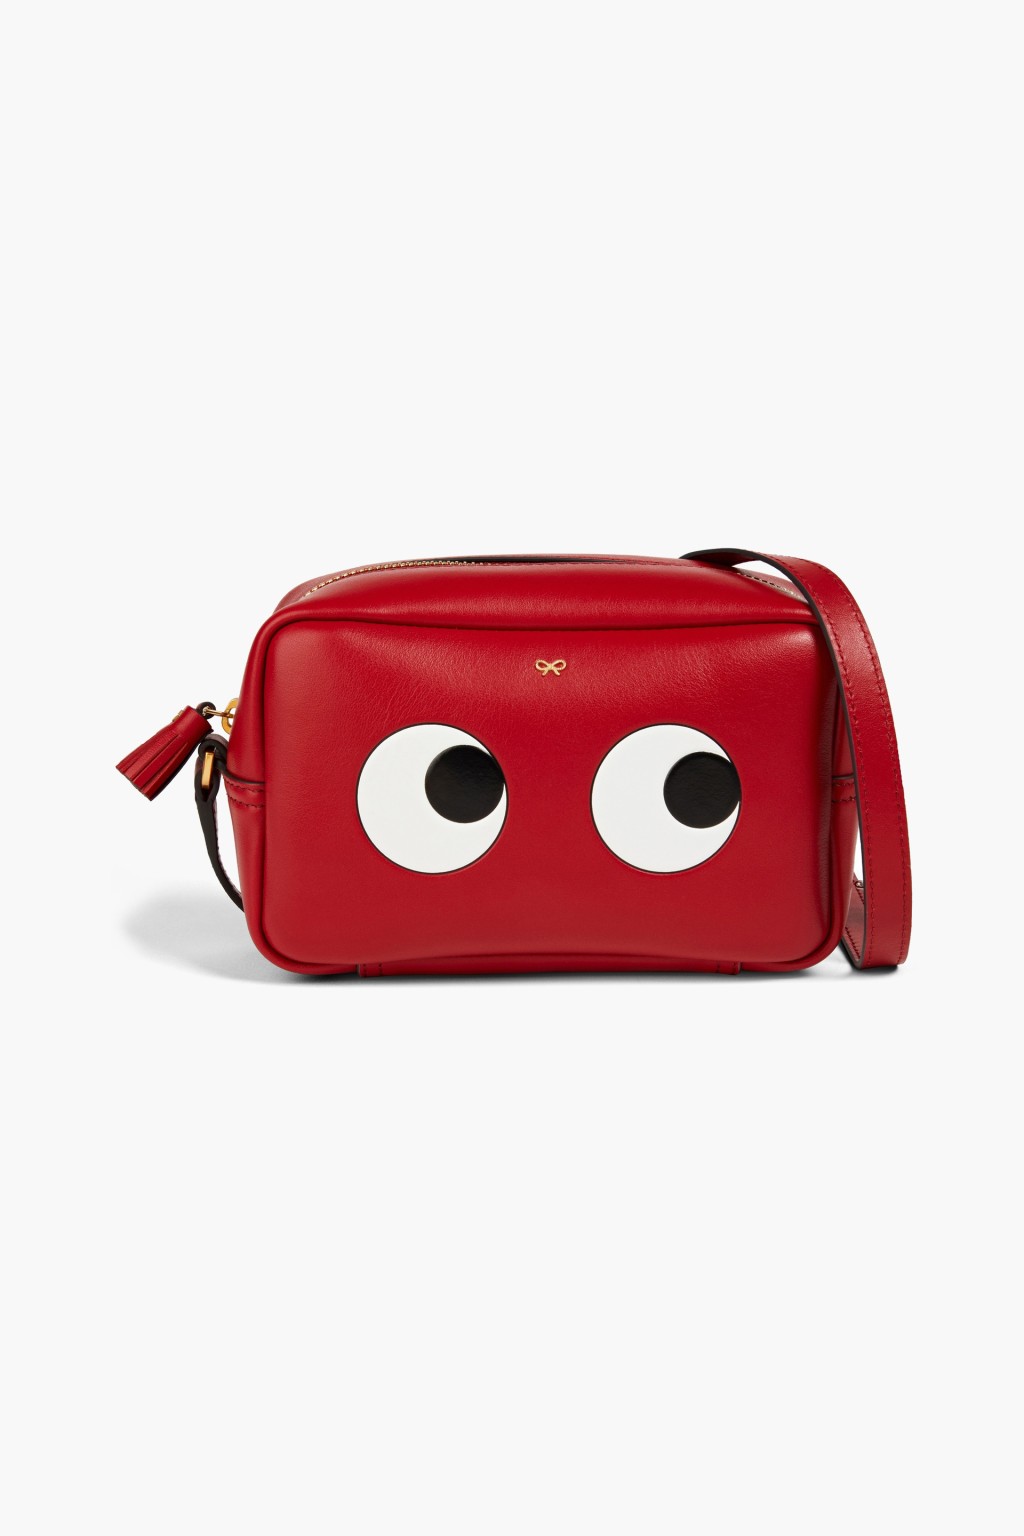 Anya Hindmarch紅色手袋/原價$2,228、現售$1,671/The Outnet。